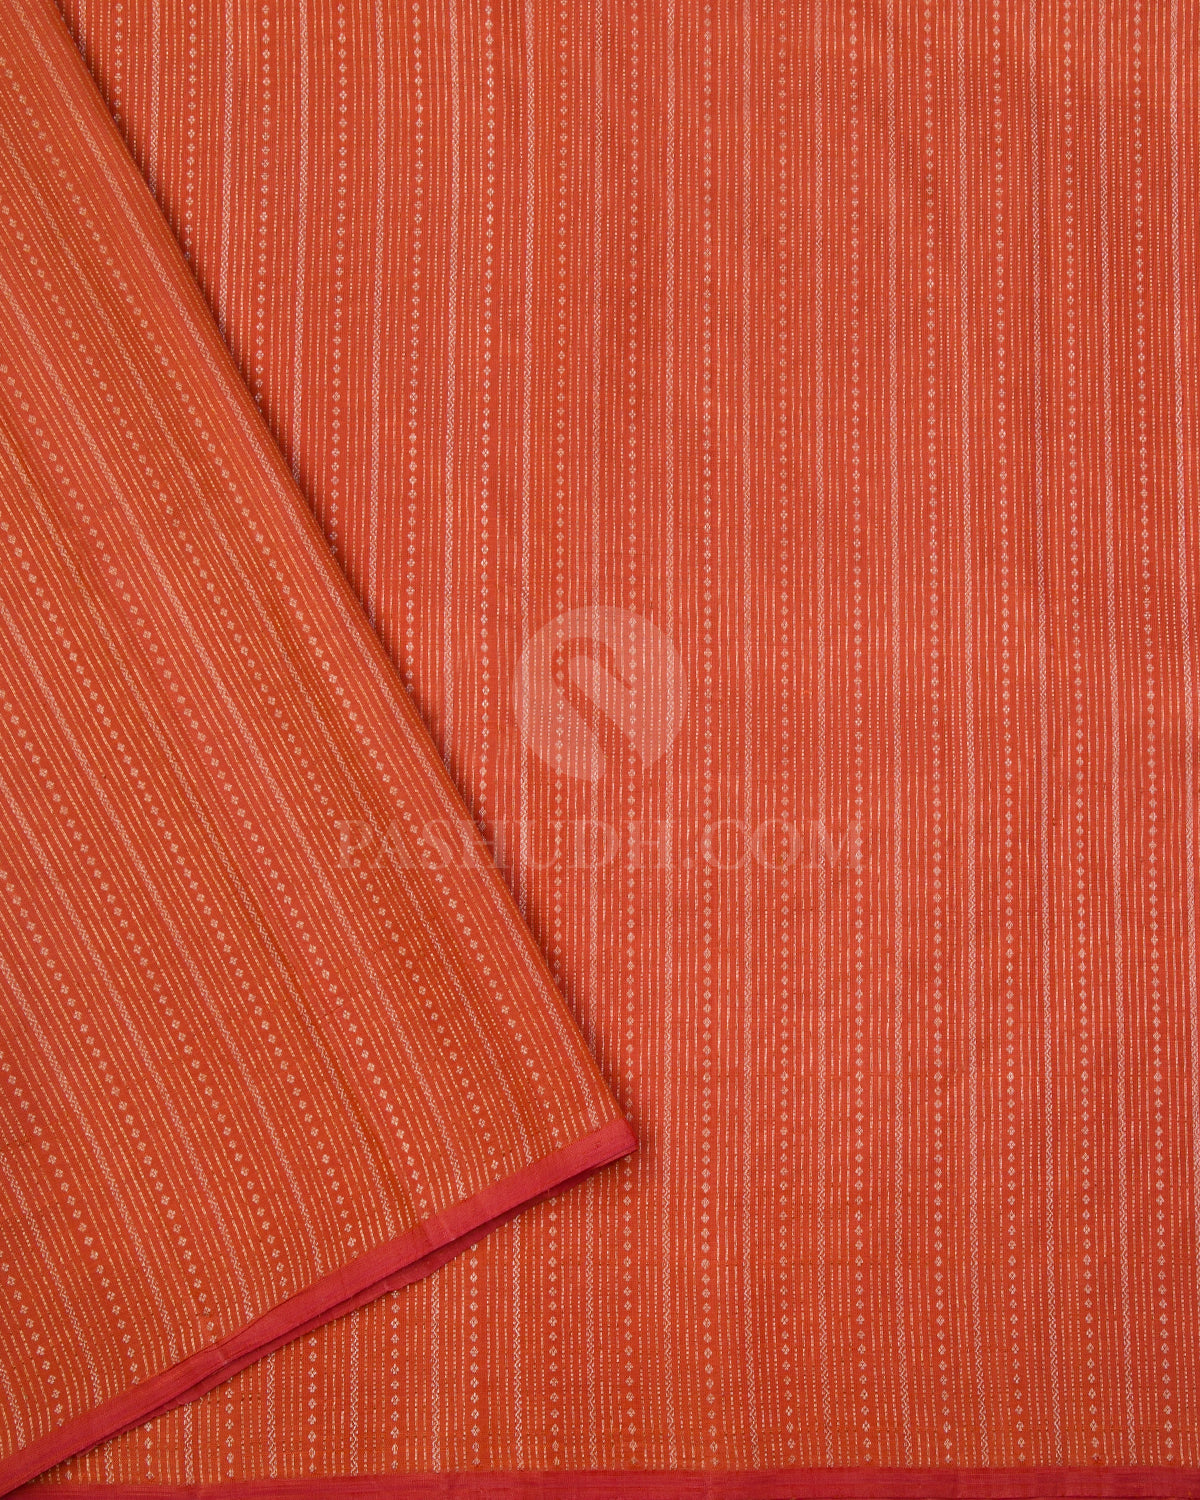 Flaxen Yellow & Rust Orange Organza Kanjivaram Silk Saree - S1025(A) - View 3